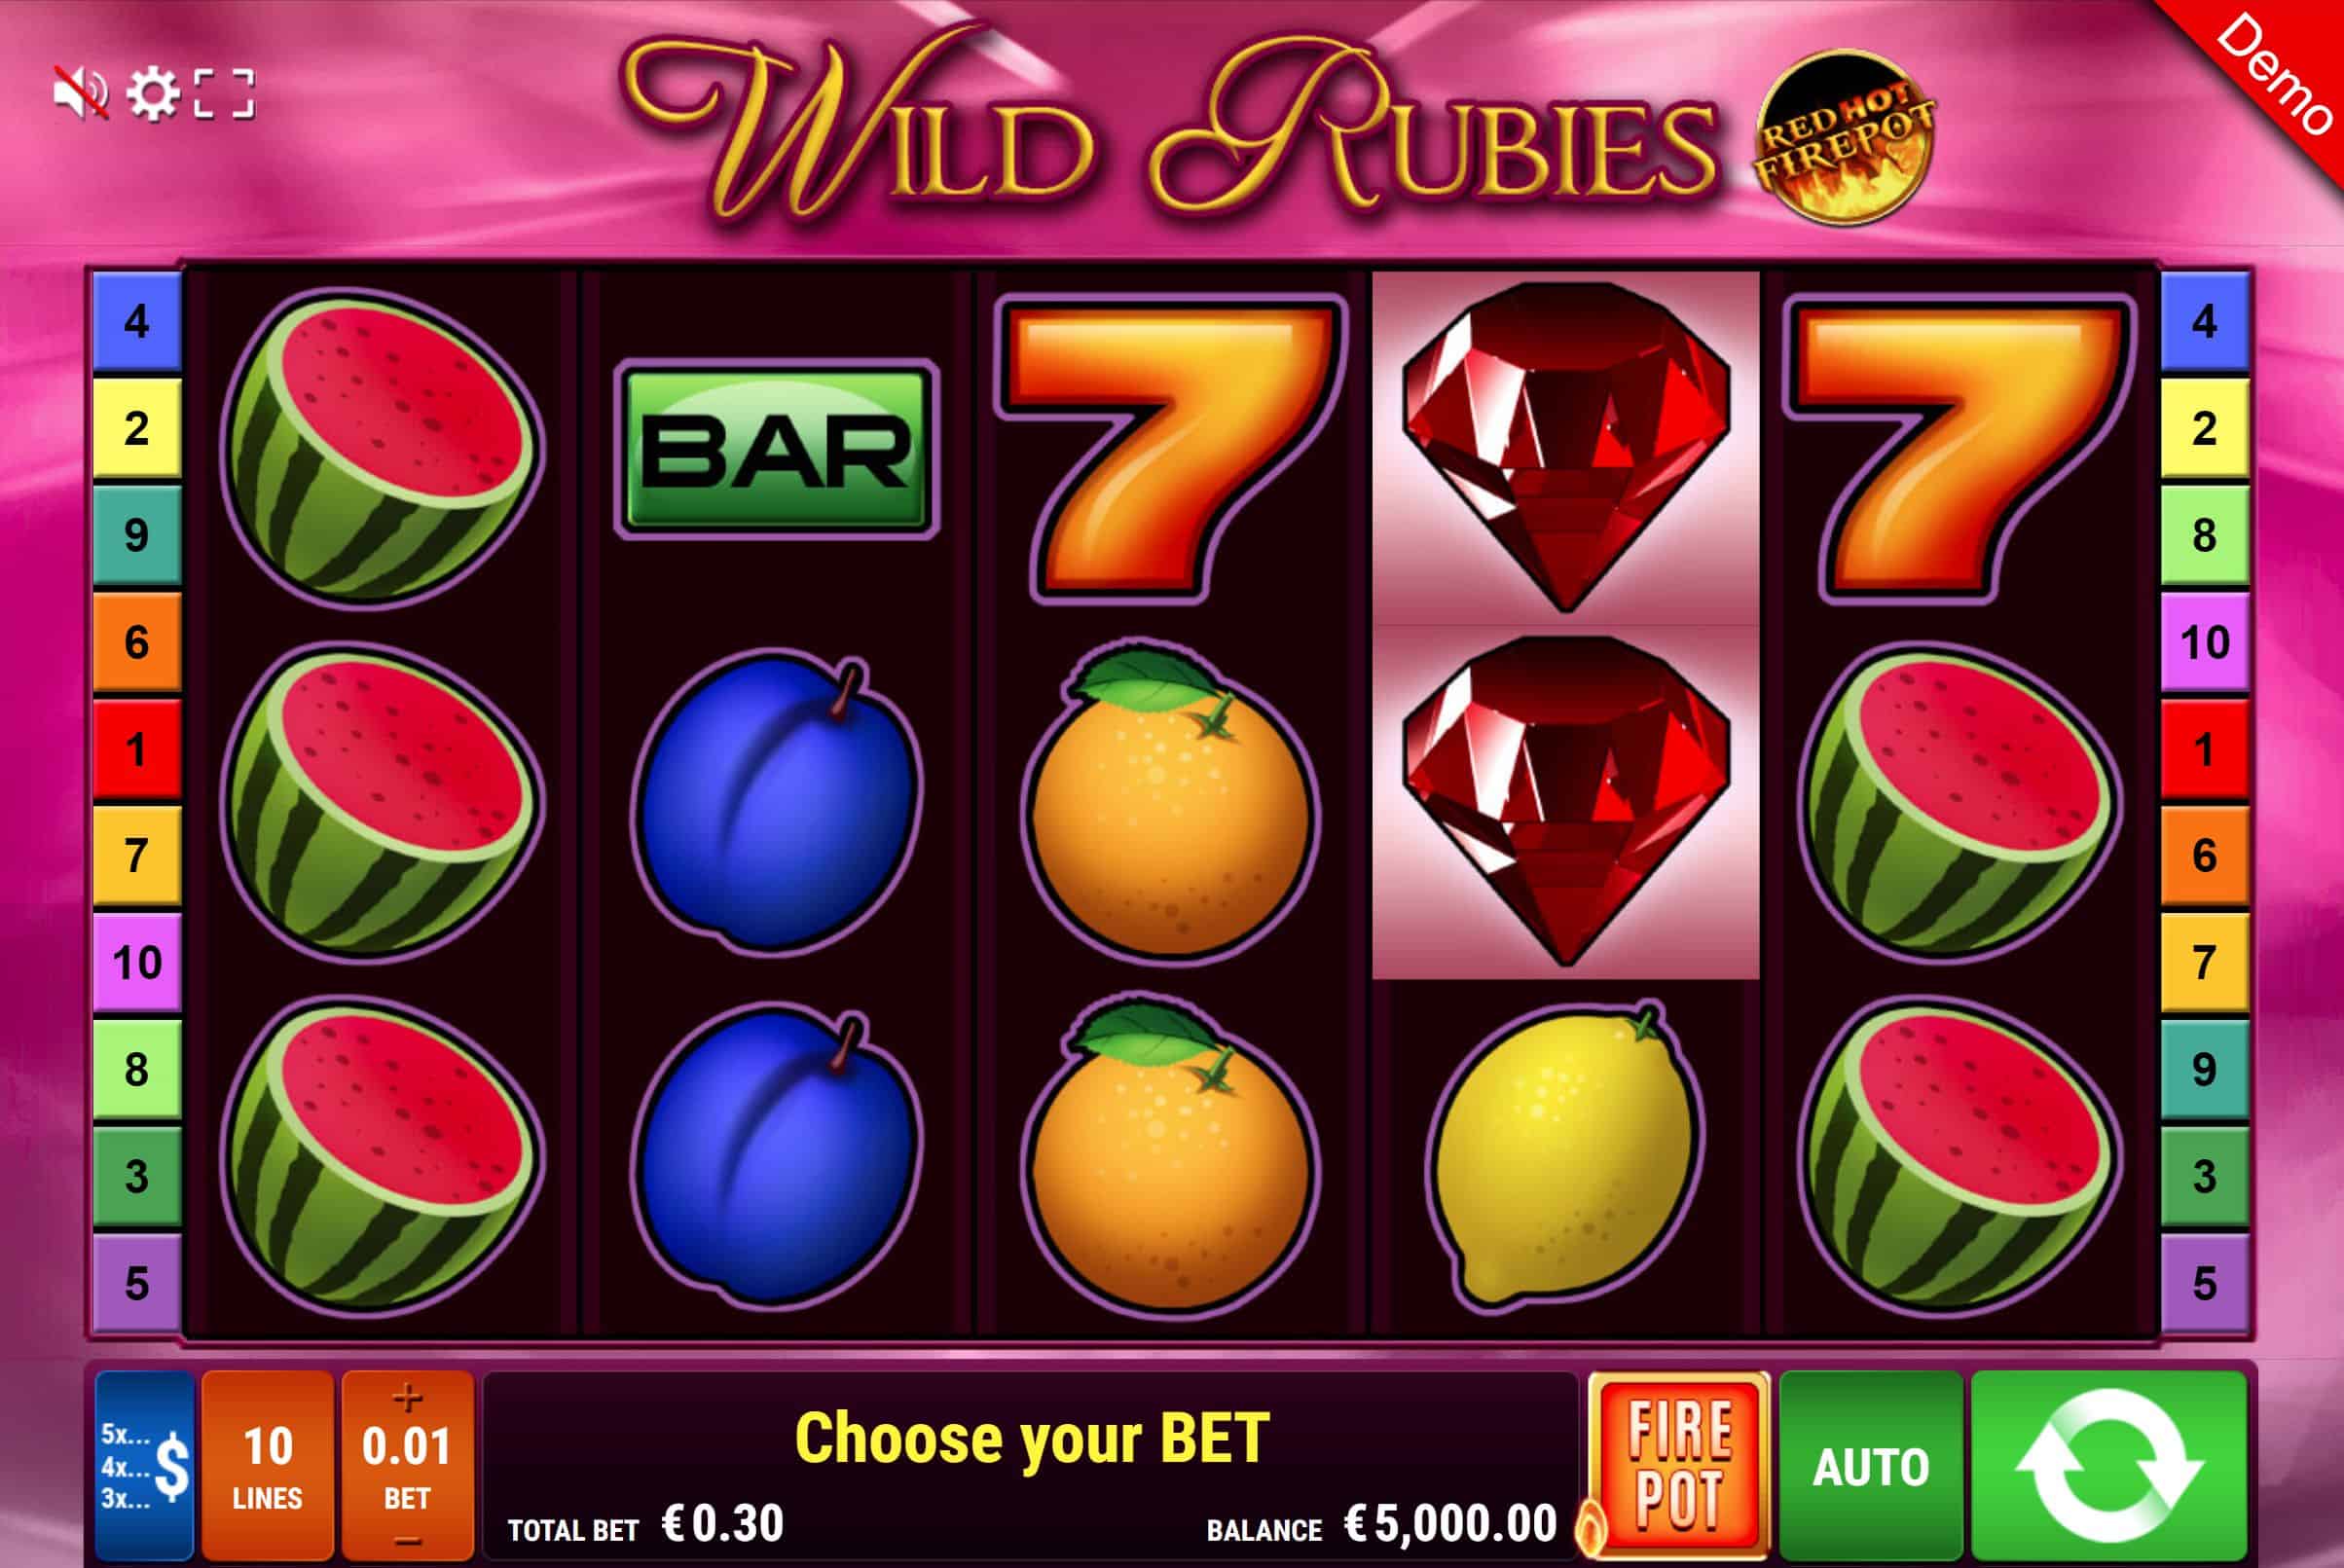 Wild Rubies RHFP Slot Game Free Play at Casino Ireland 01